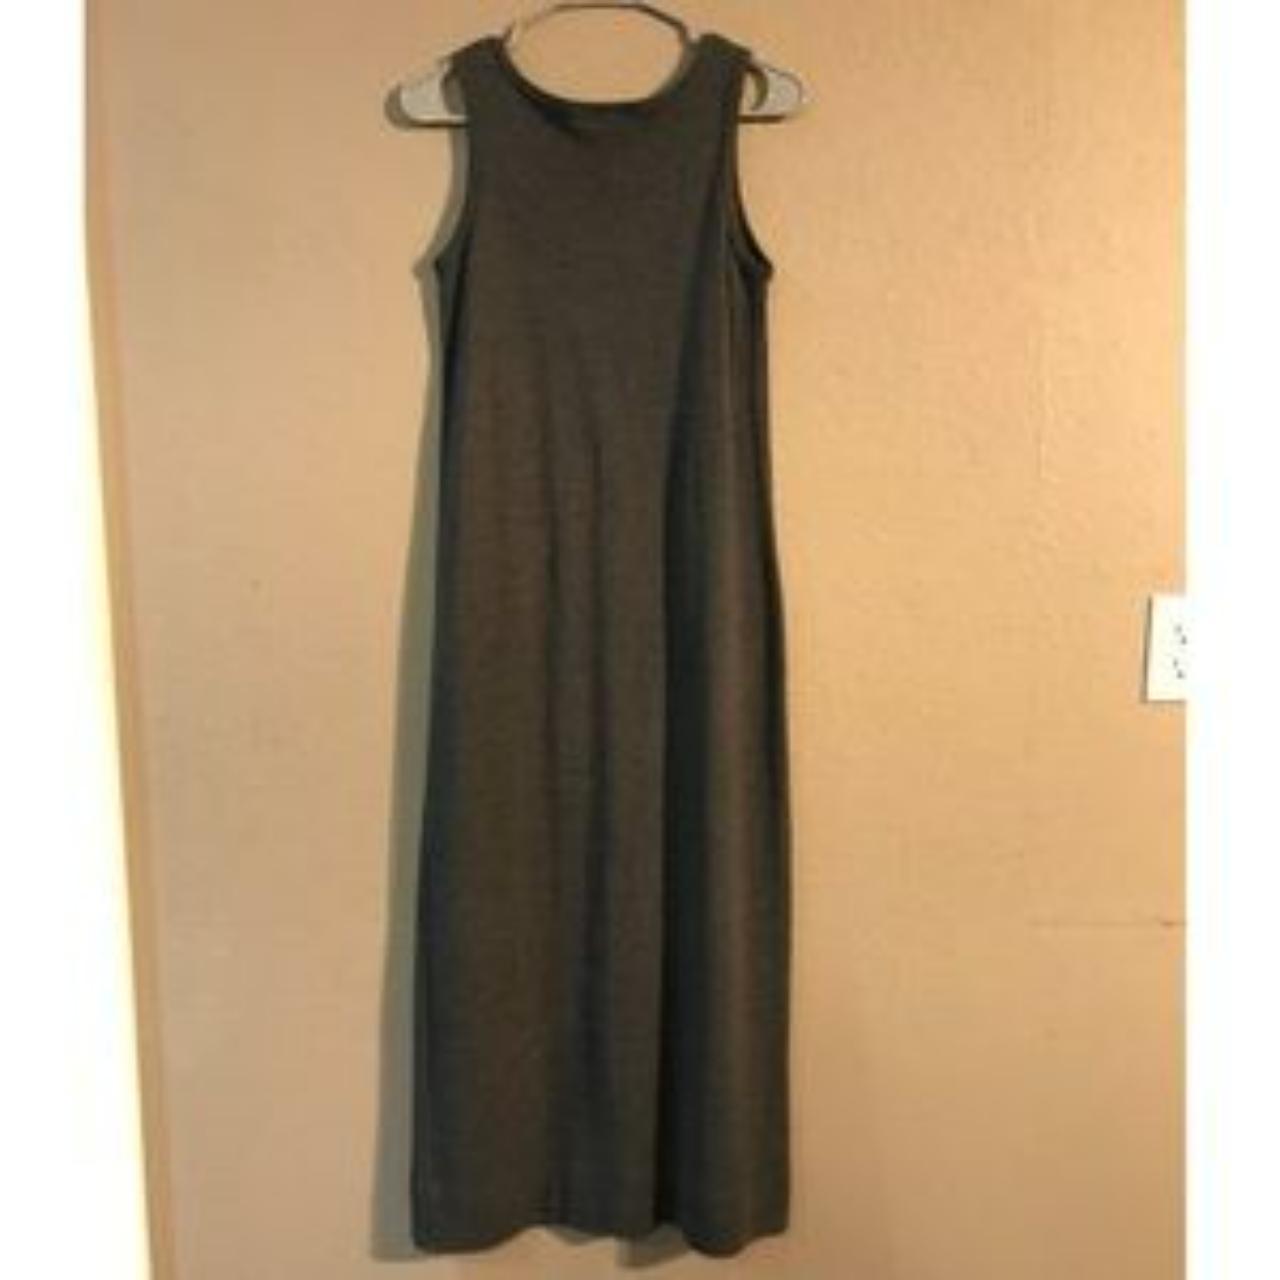 Size M Marika Grey Maxi Dress. This dress is in nice... - Depop